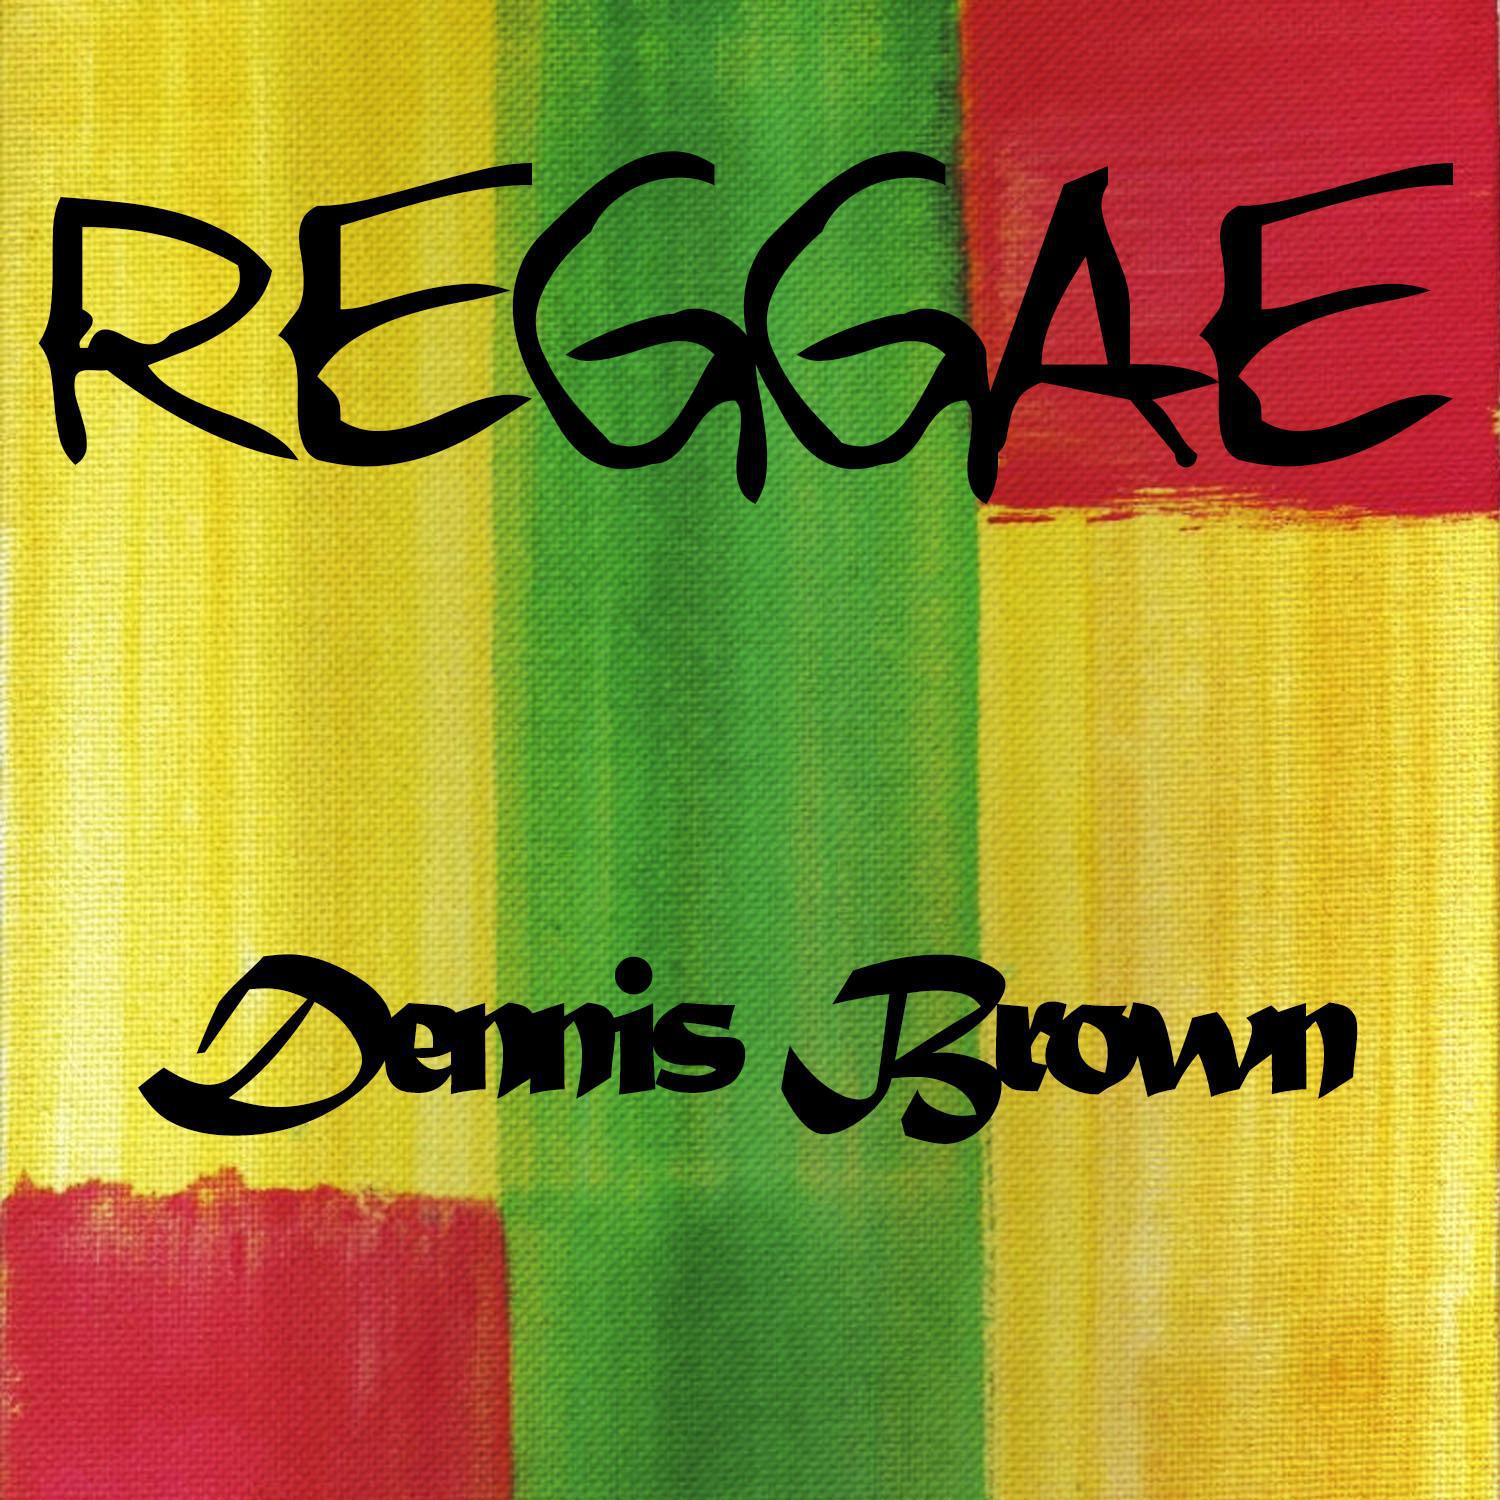 Reggae Dennis Brown